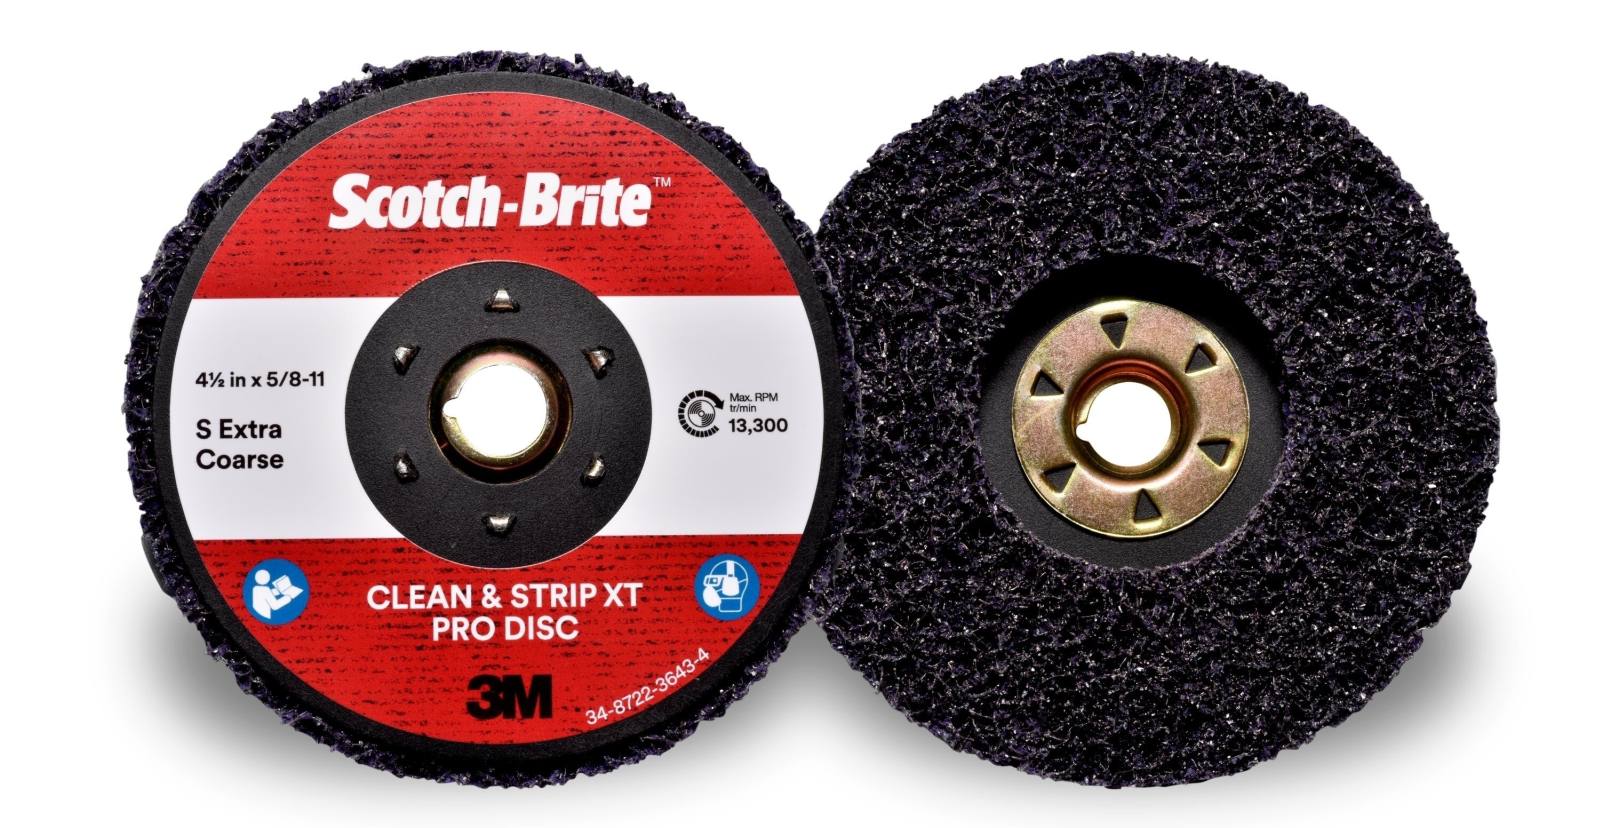 3M Scotch-Brite disque de nettoyage grossier XT-DB Pro, 178 mm x 22 mm, S, extra coarse